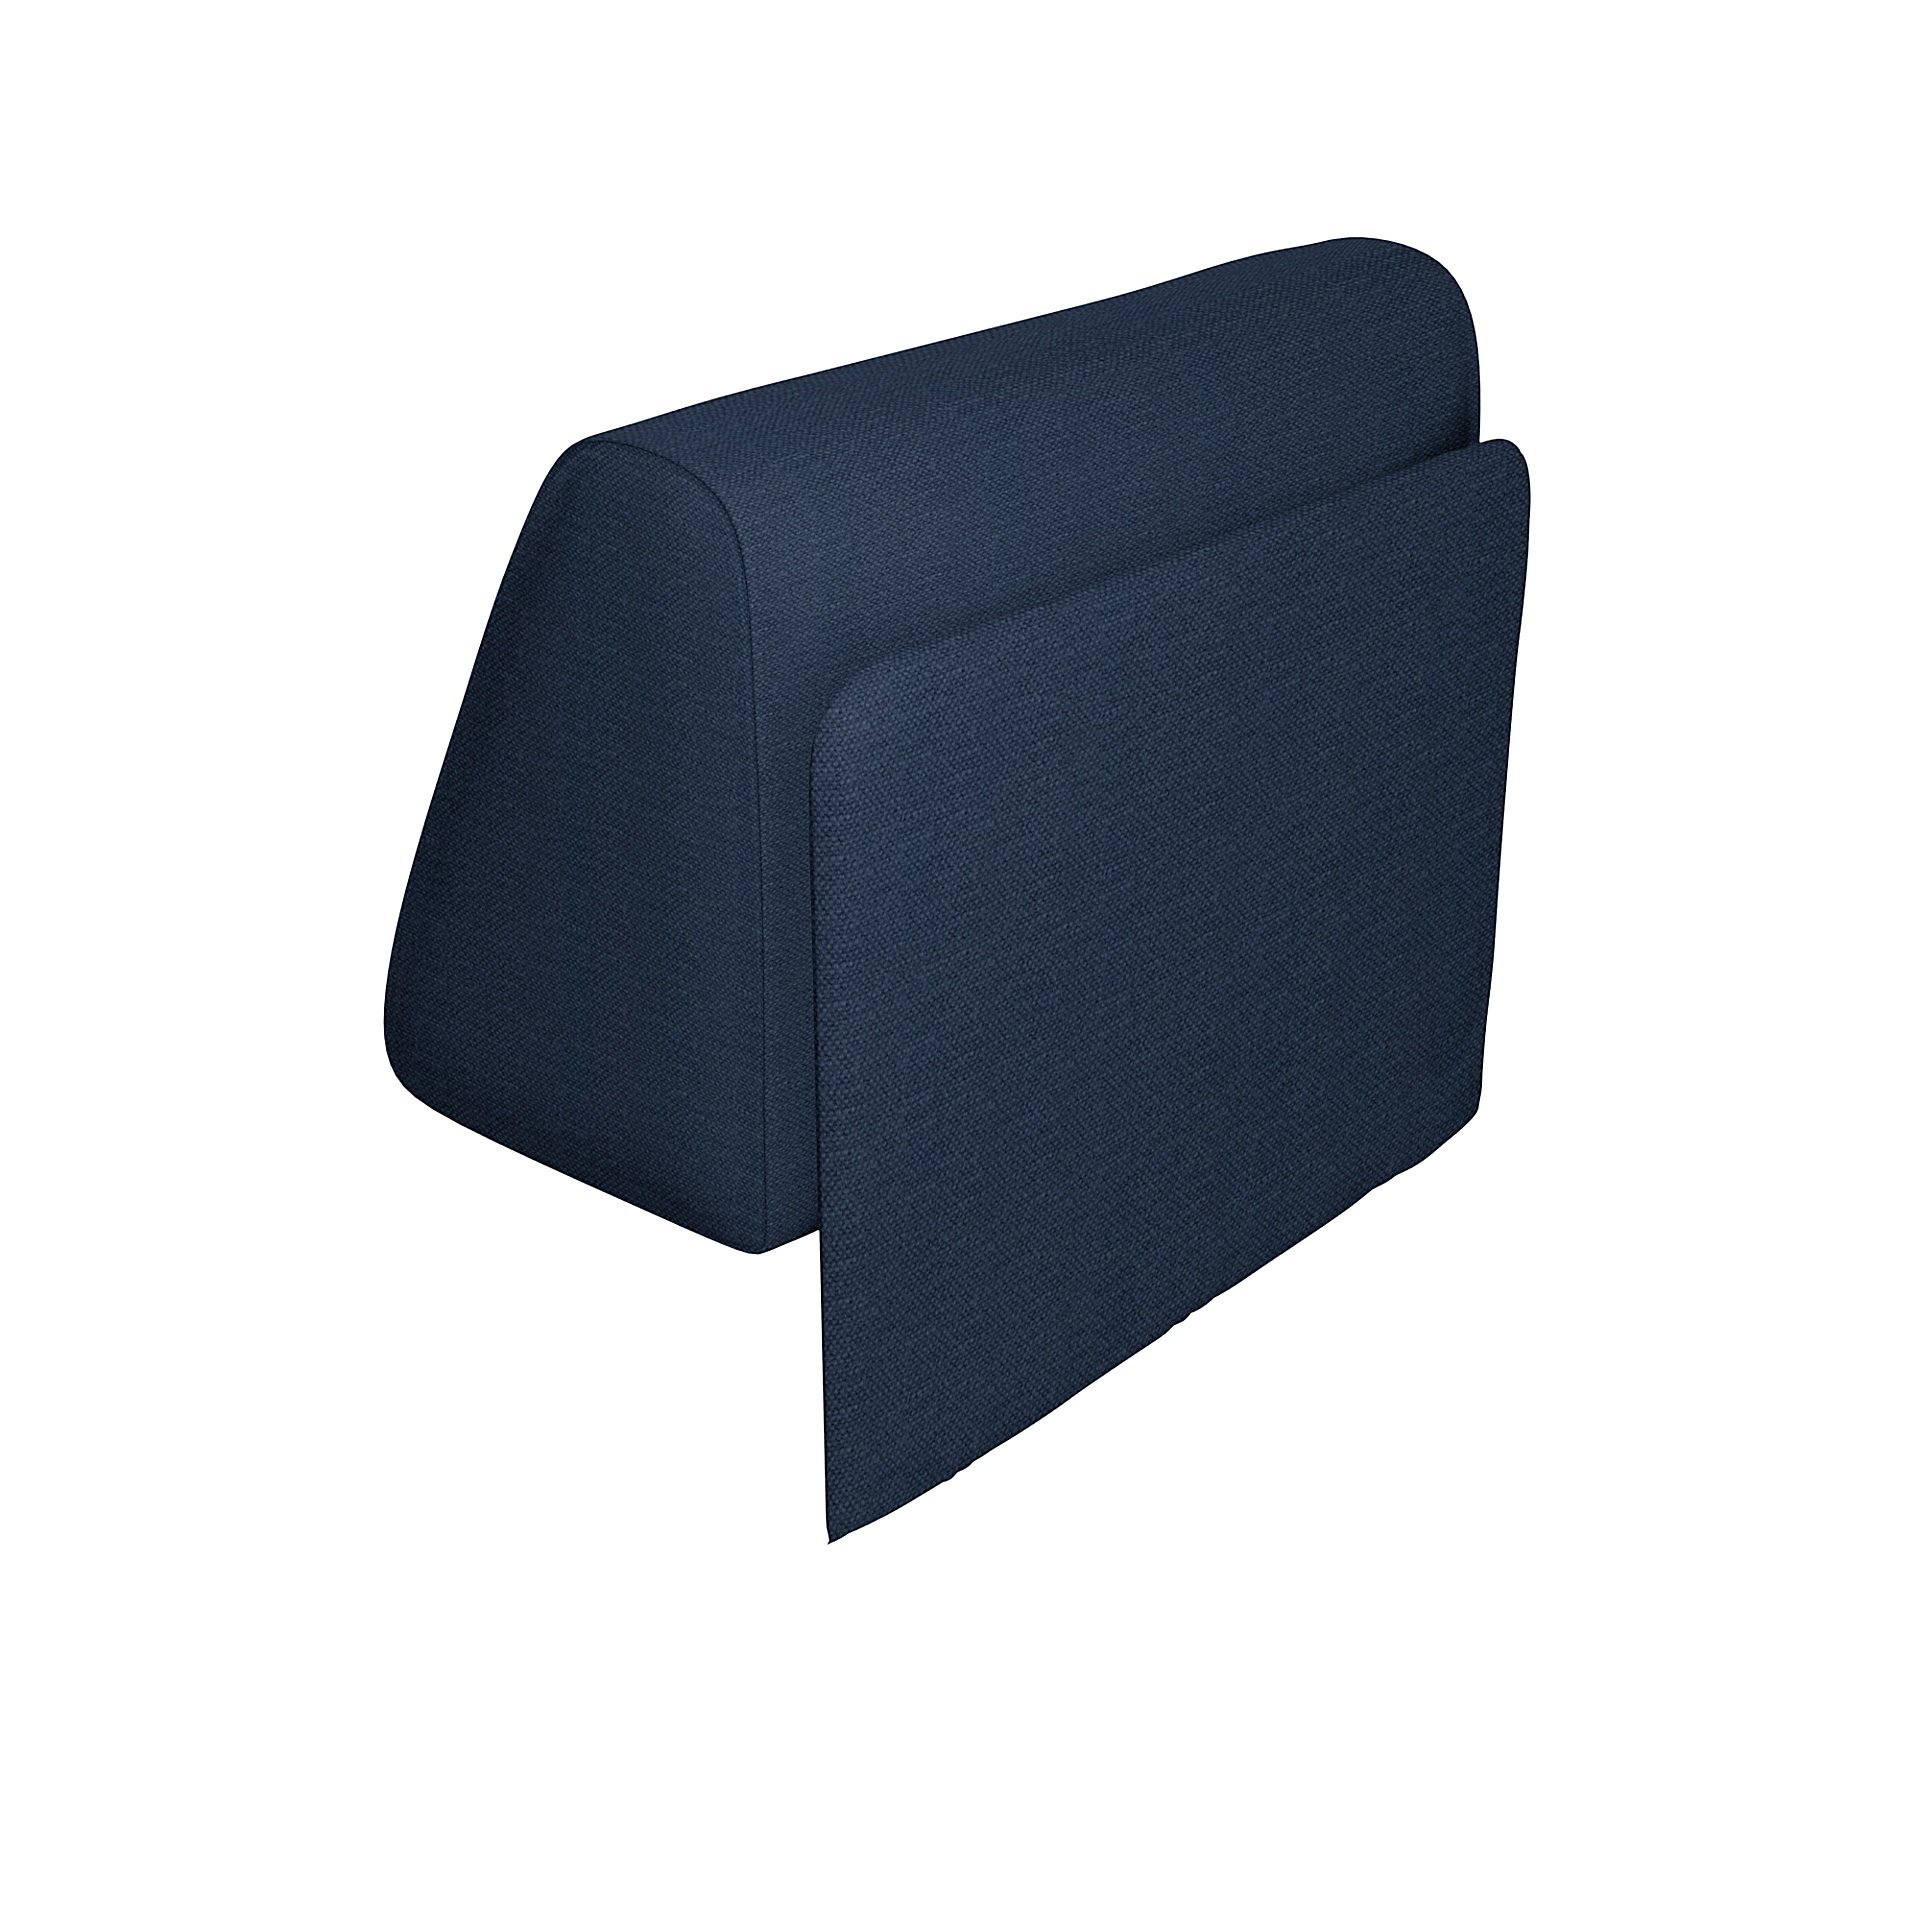 IKEA - Delaktig Backrest with Cushion Cover, Navy Blue, Linen - Bemz